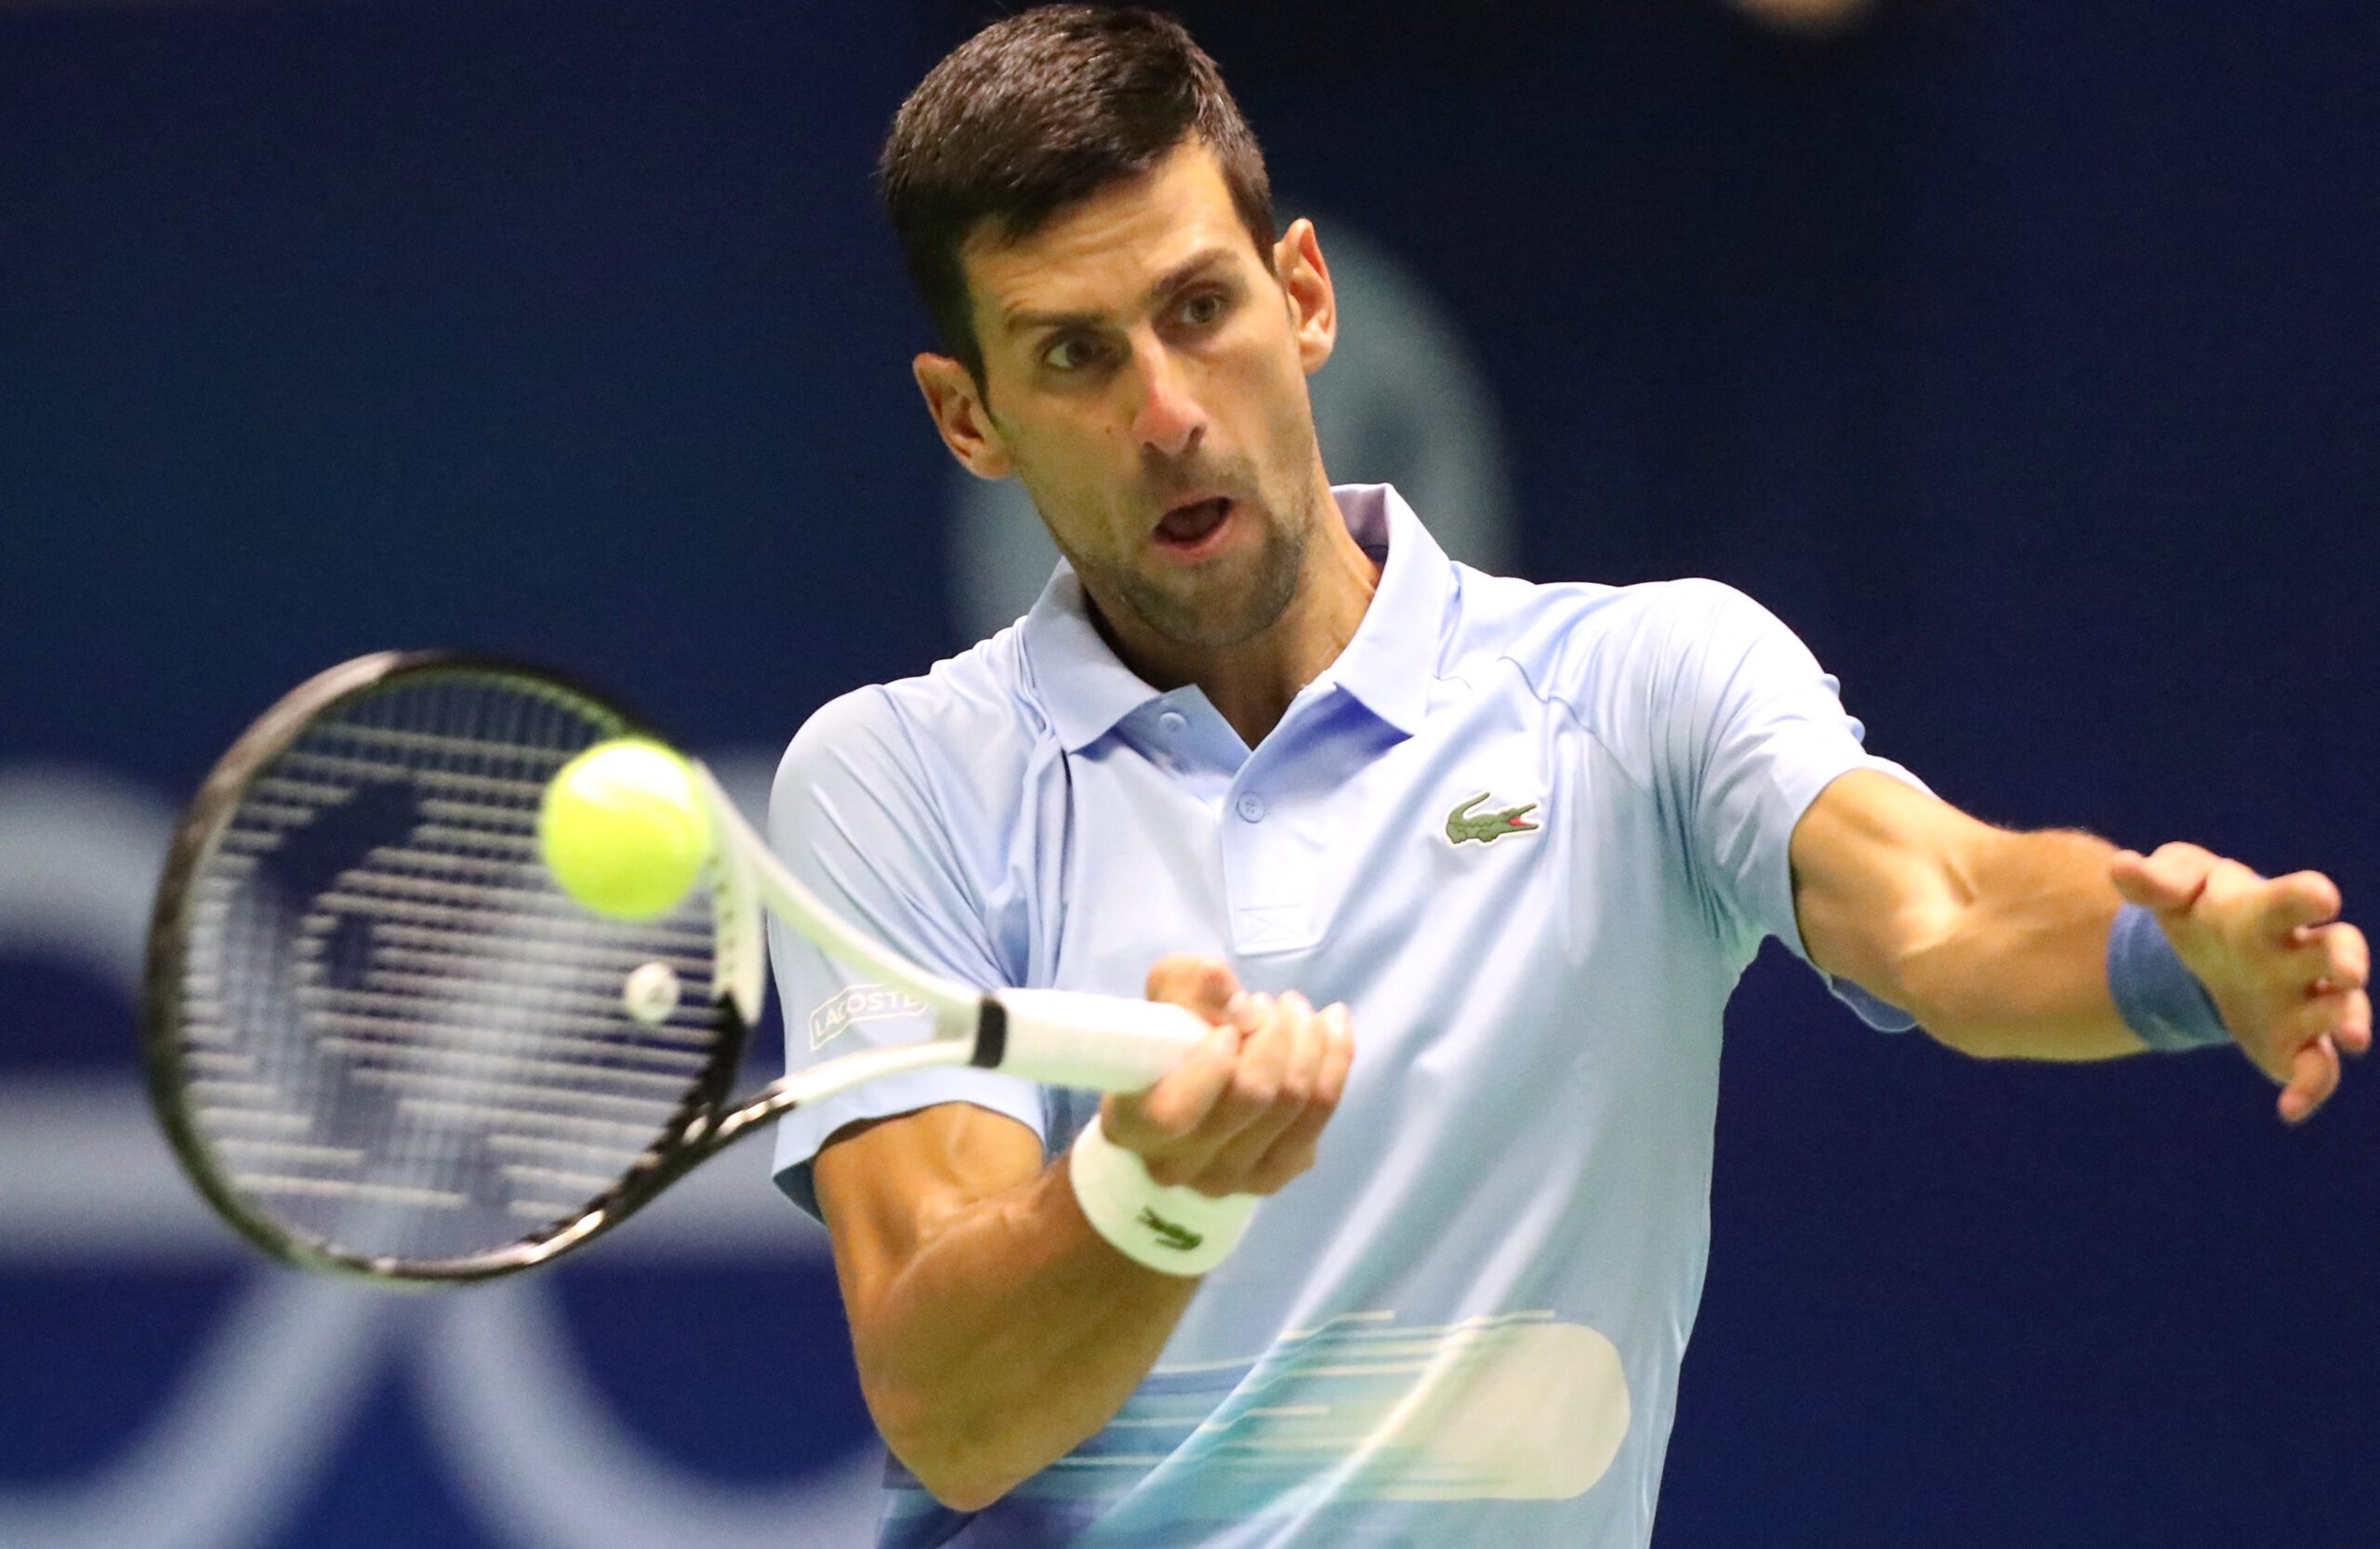 ‘Positive signs’ over Australia entry, says Djokovic